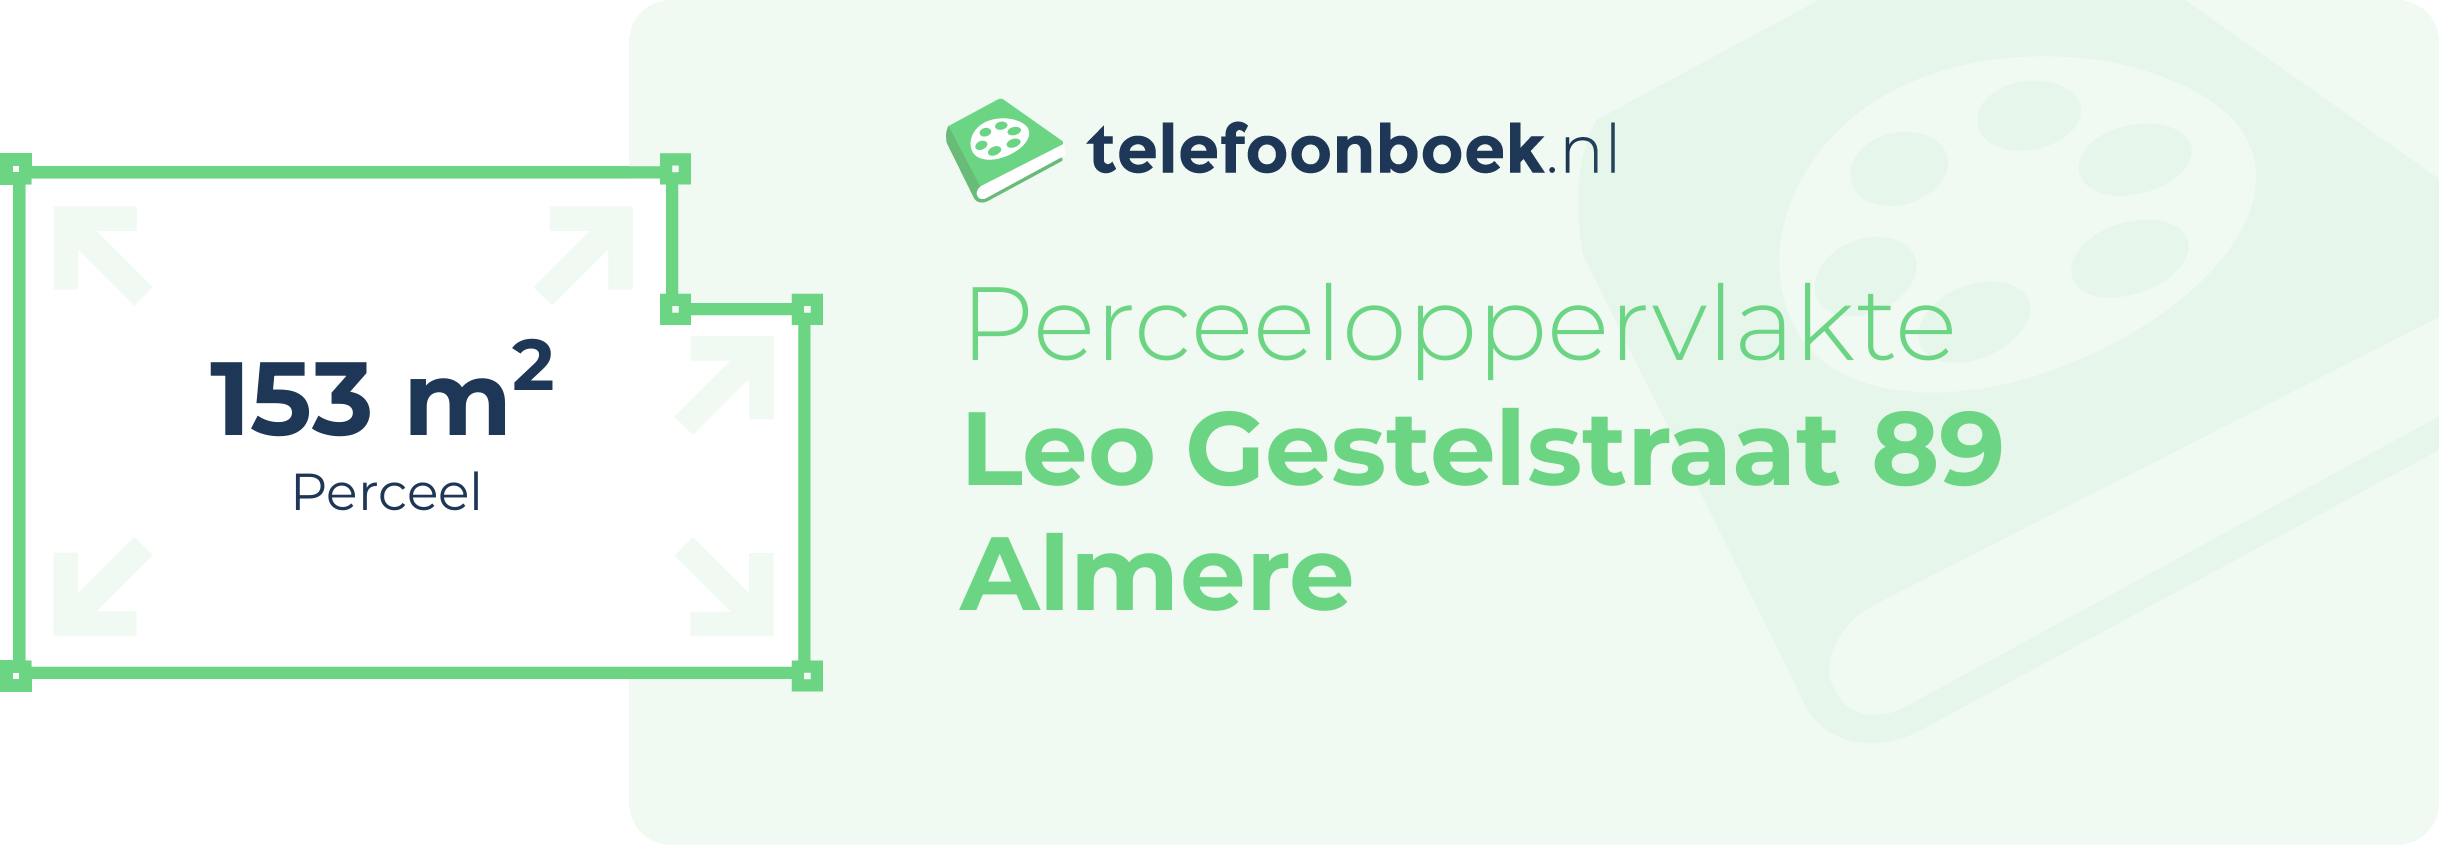 Perceeloppervlakte Leo Gestelstraat 89 Almere